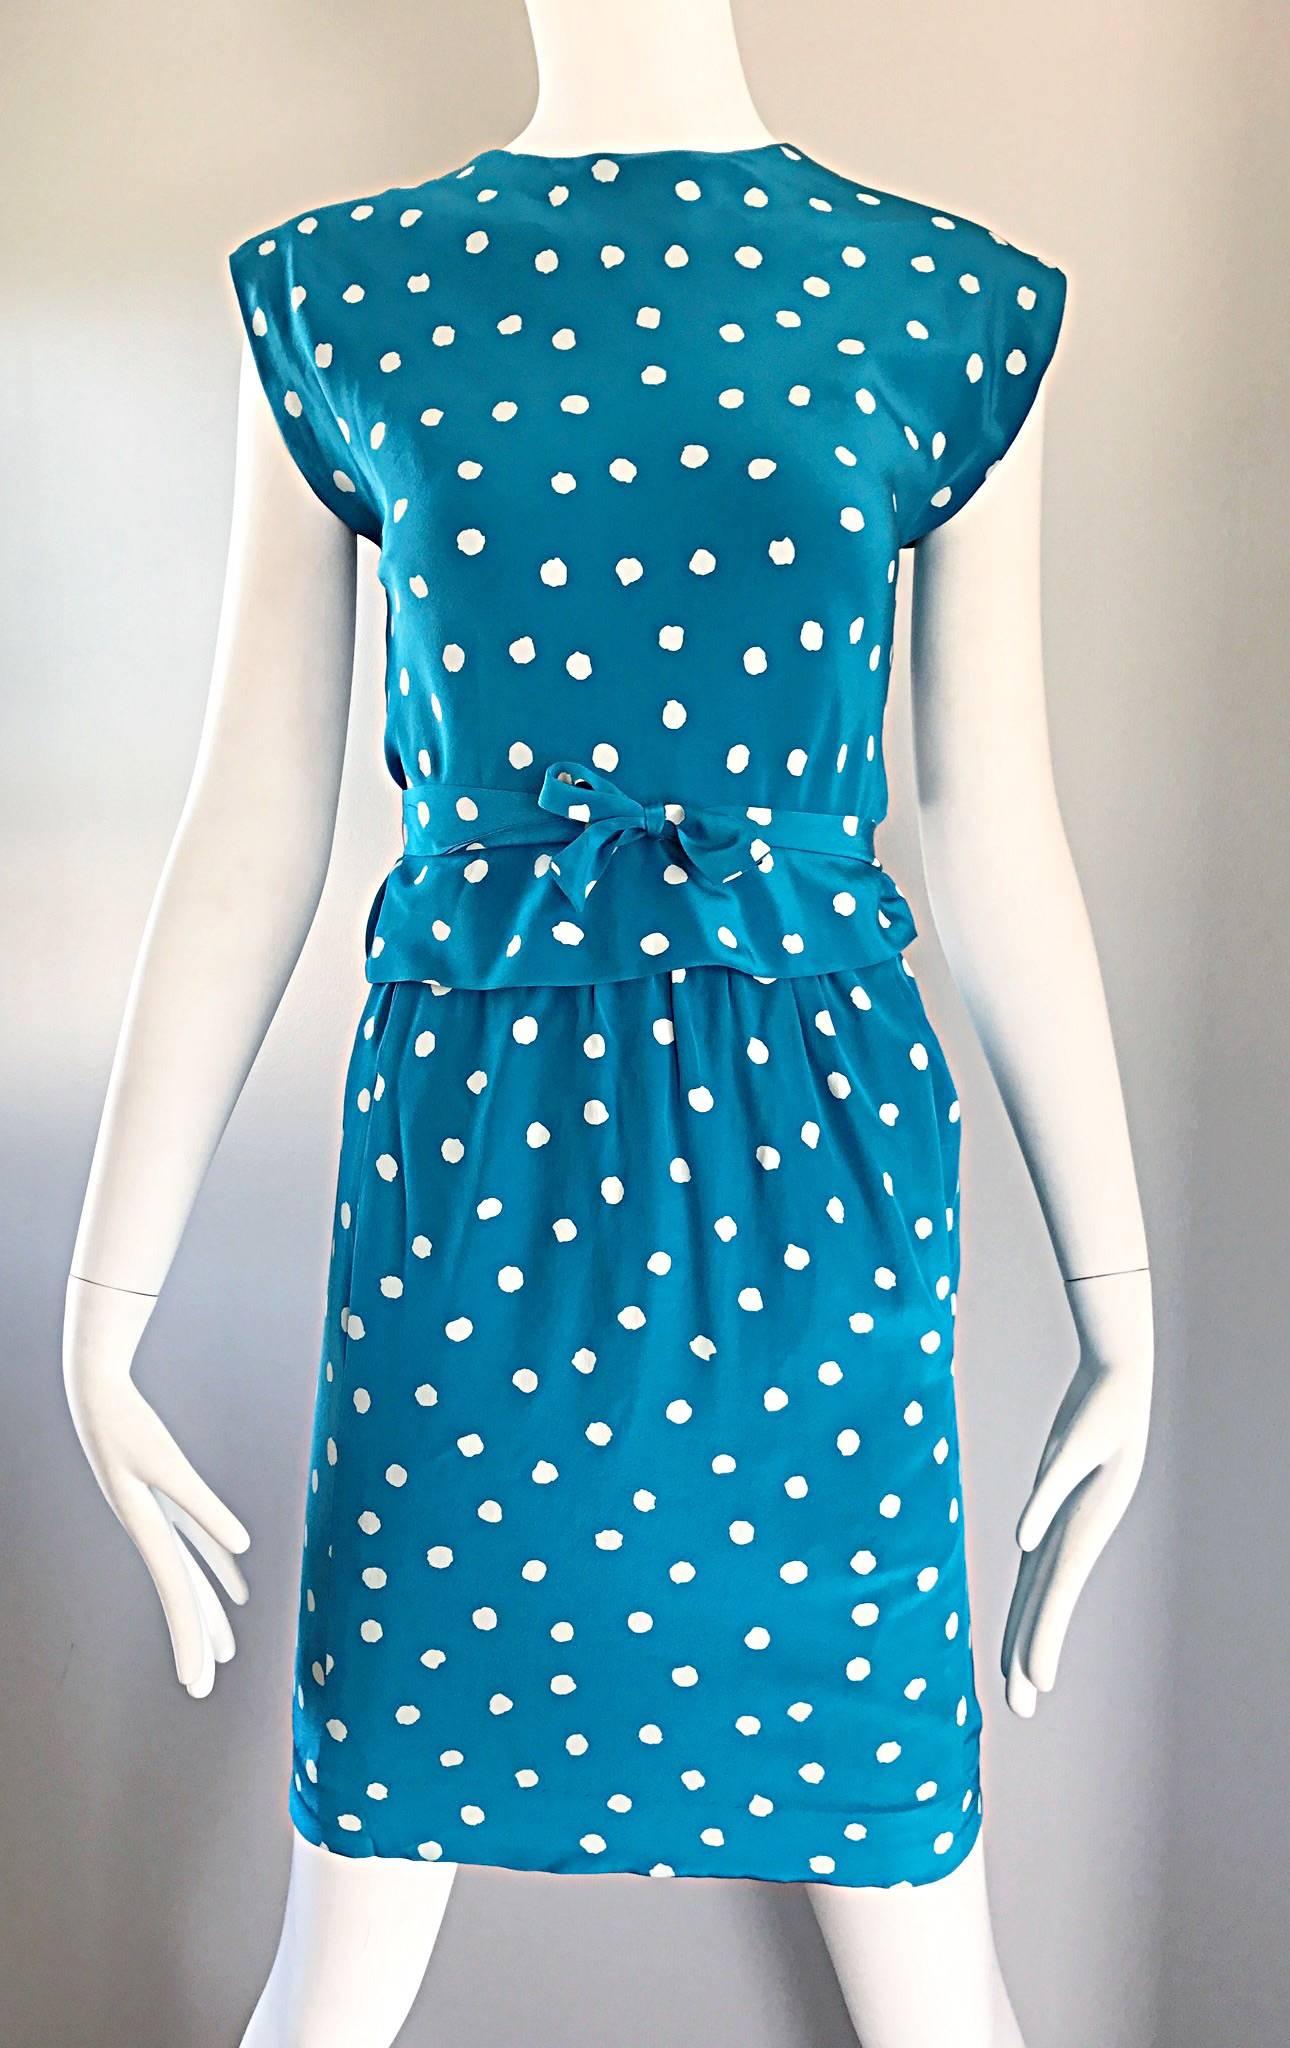 bright blue polka dot dress